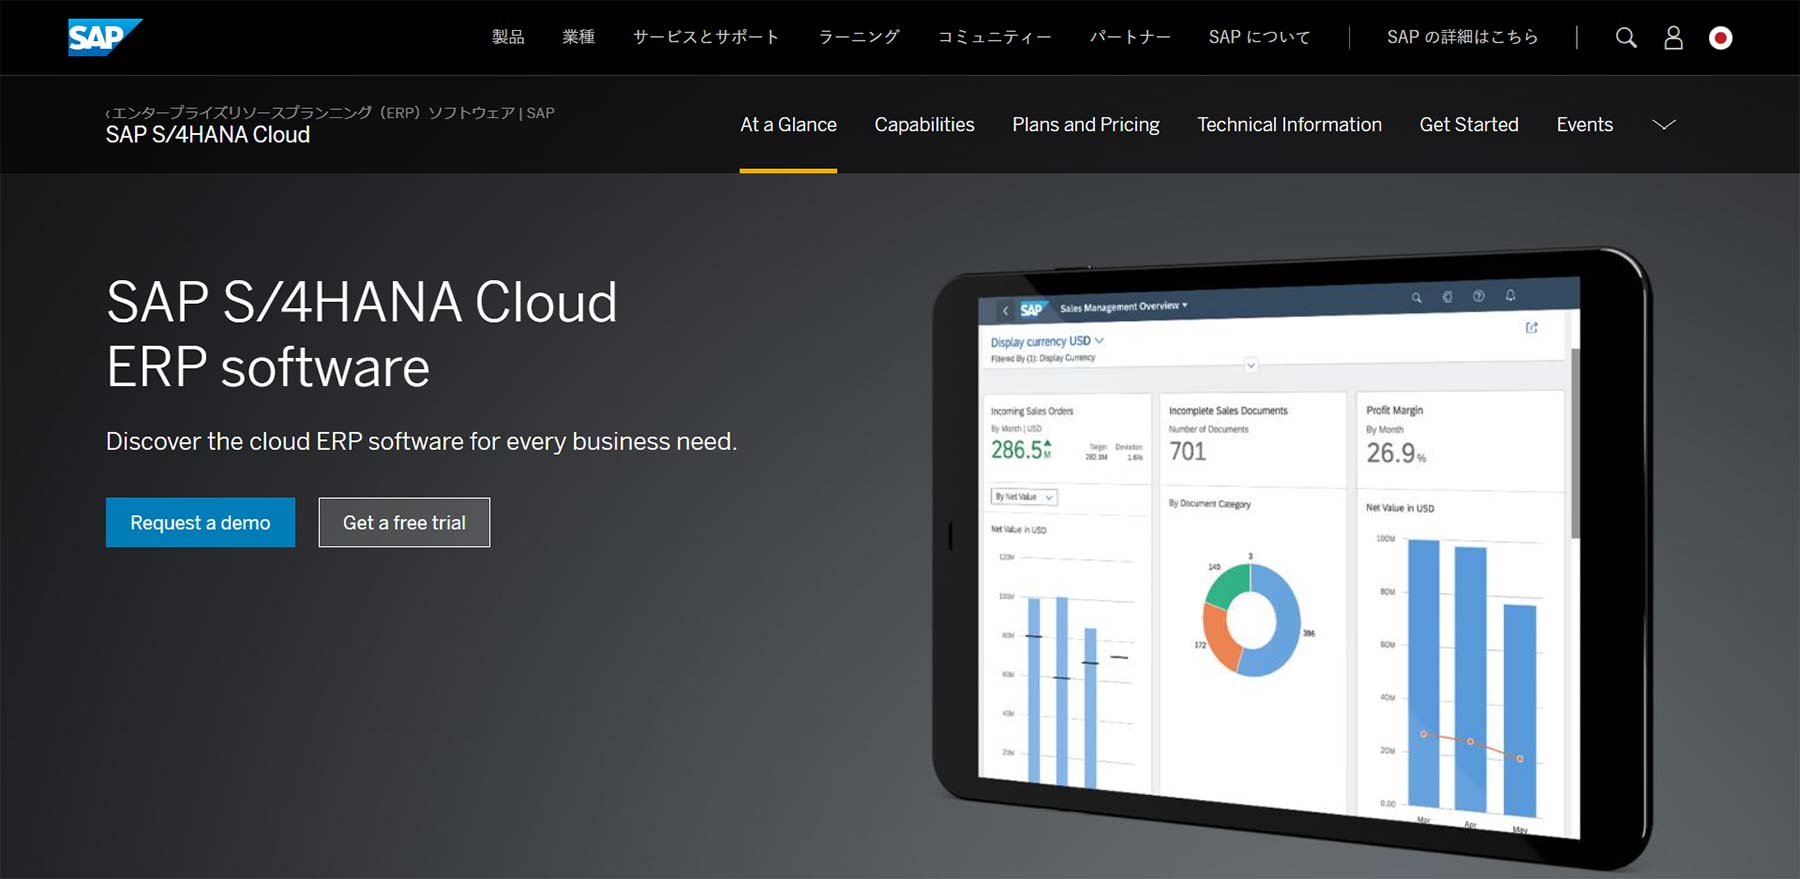 SAP S/4HANA Cloud公式Webサイト